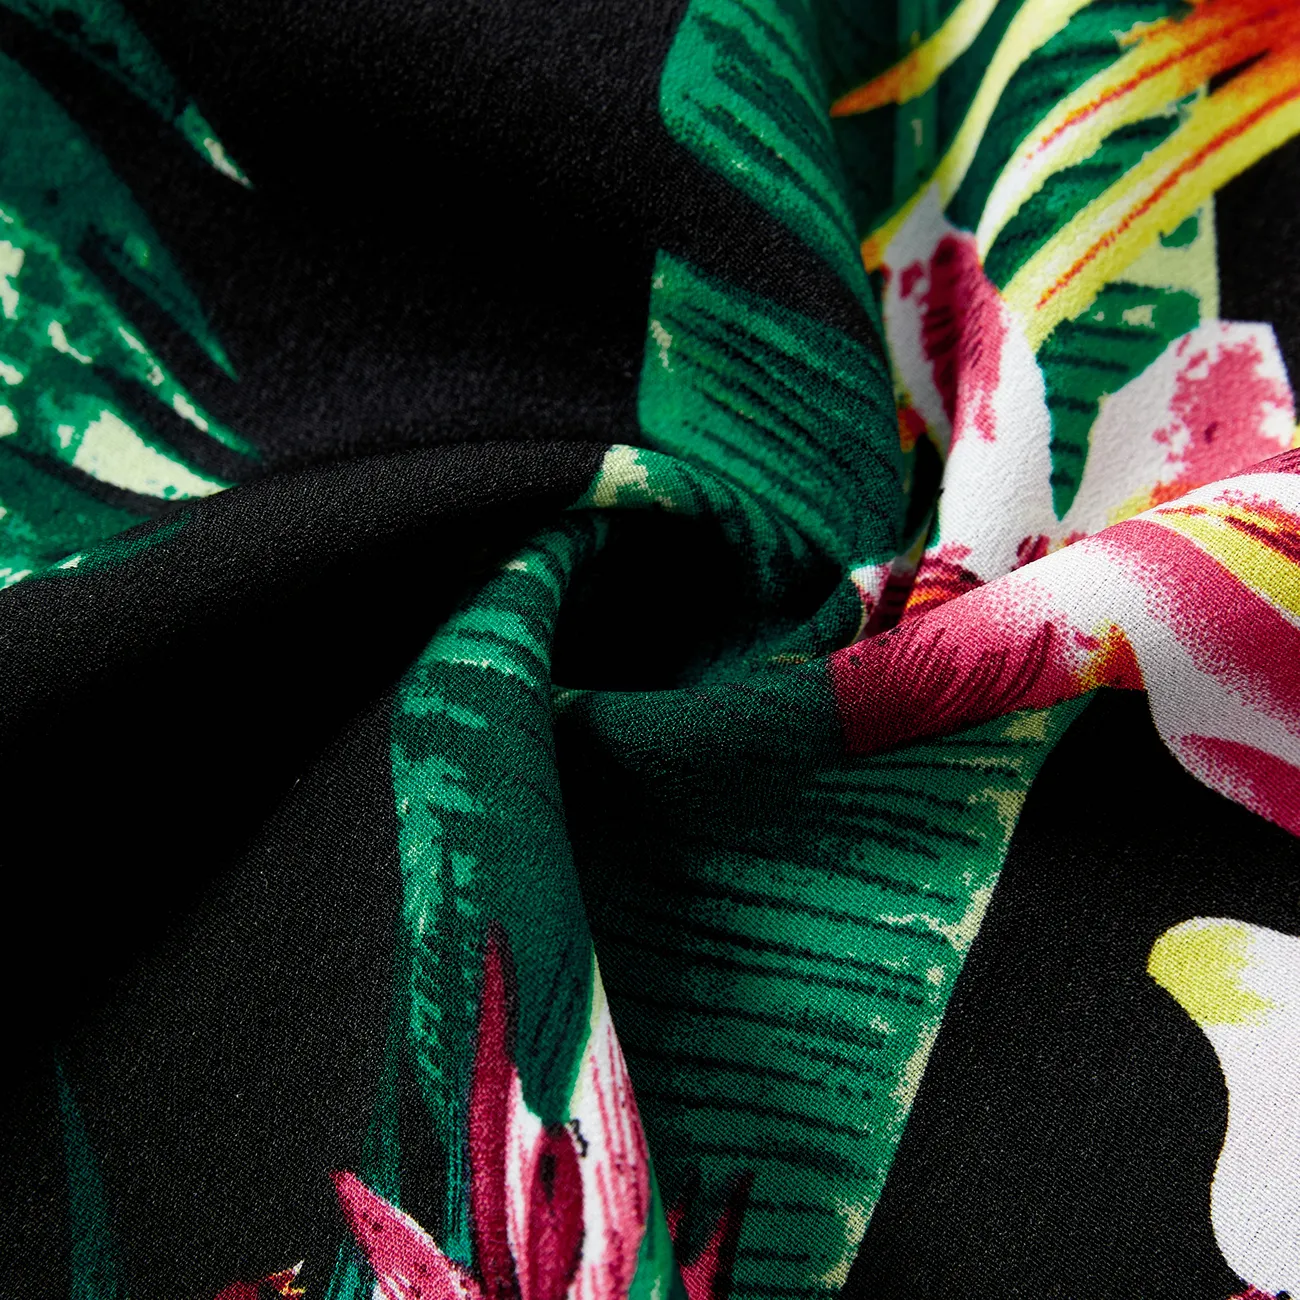 Family Matching Co-ord Sets Tropical Plant Floral Shirt and Drawstring Shorts with Pockets  Black big image 1